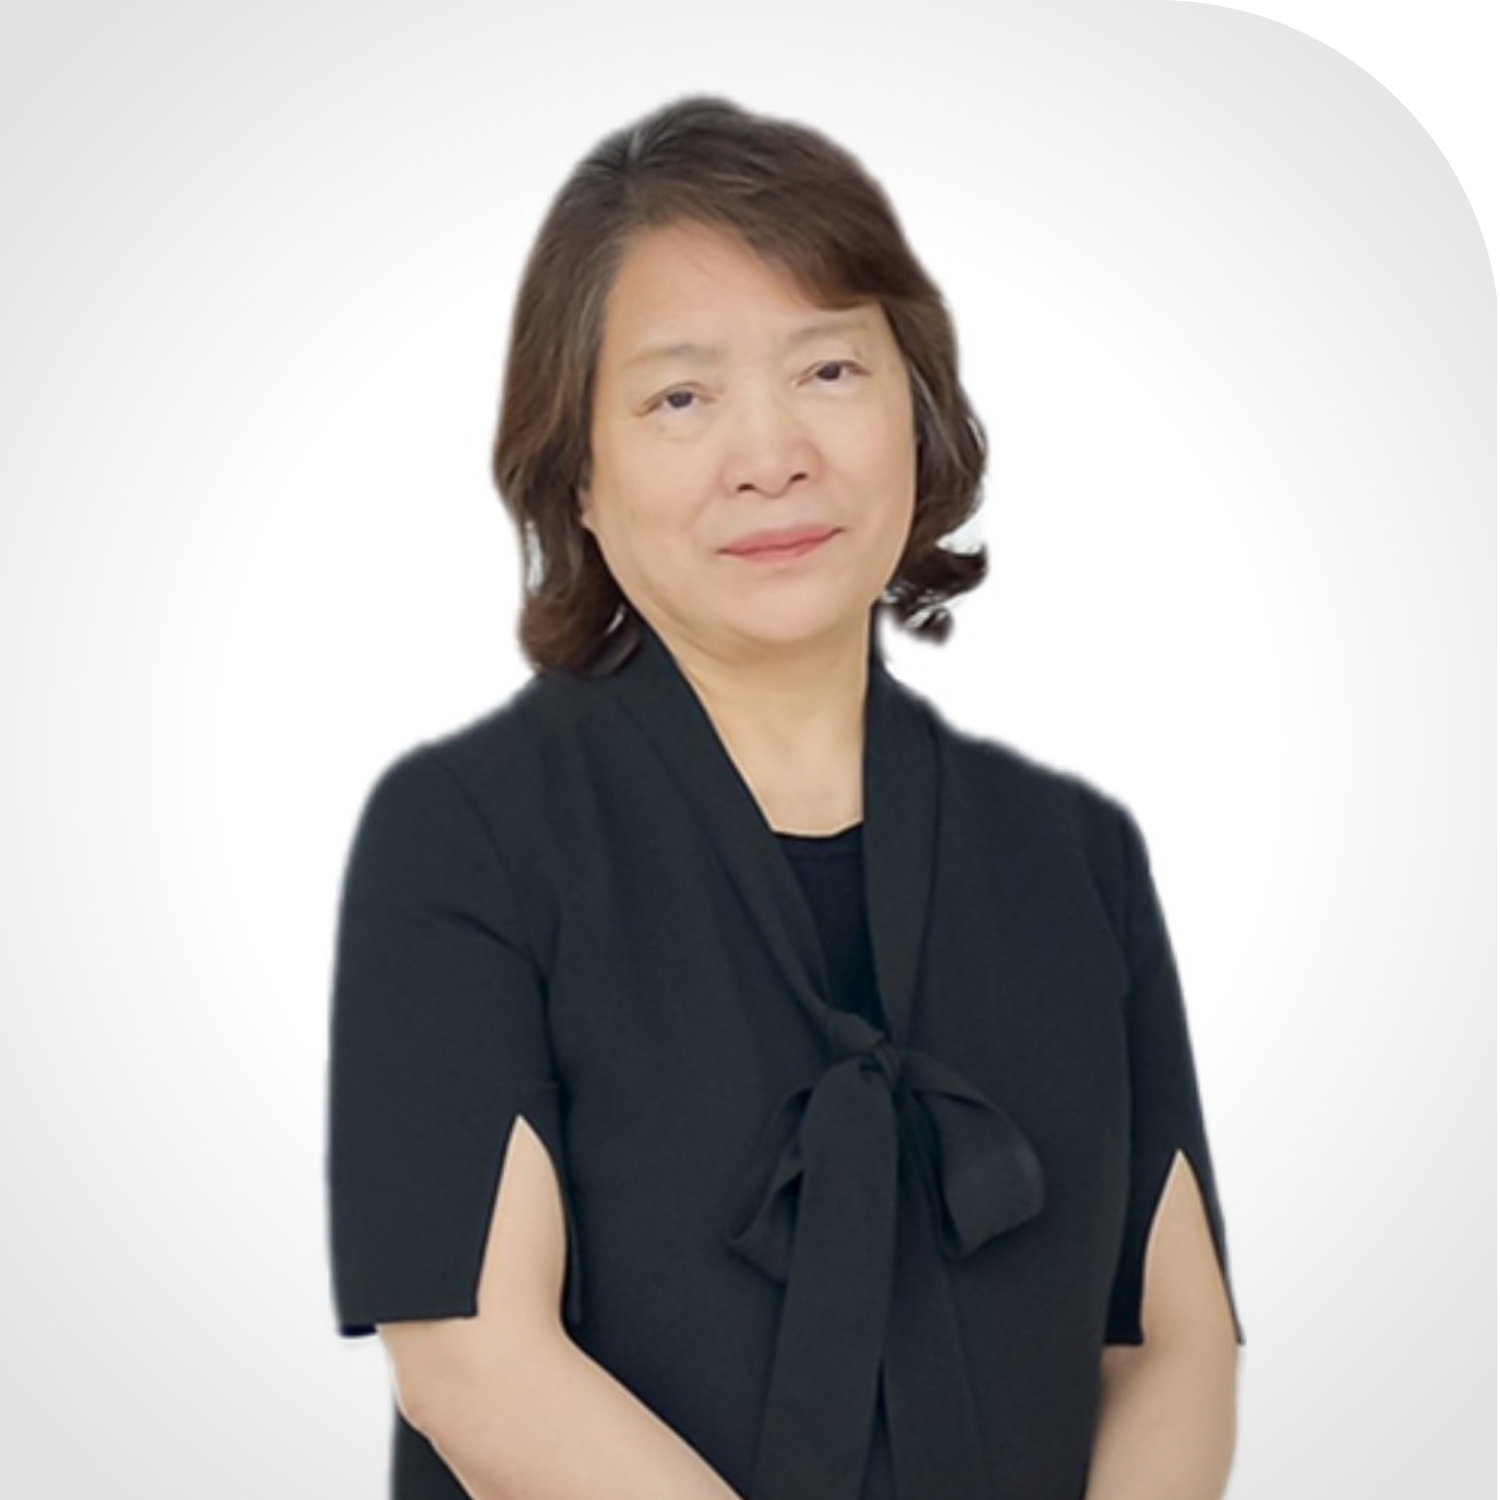 Madam Chau Minh Trinh